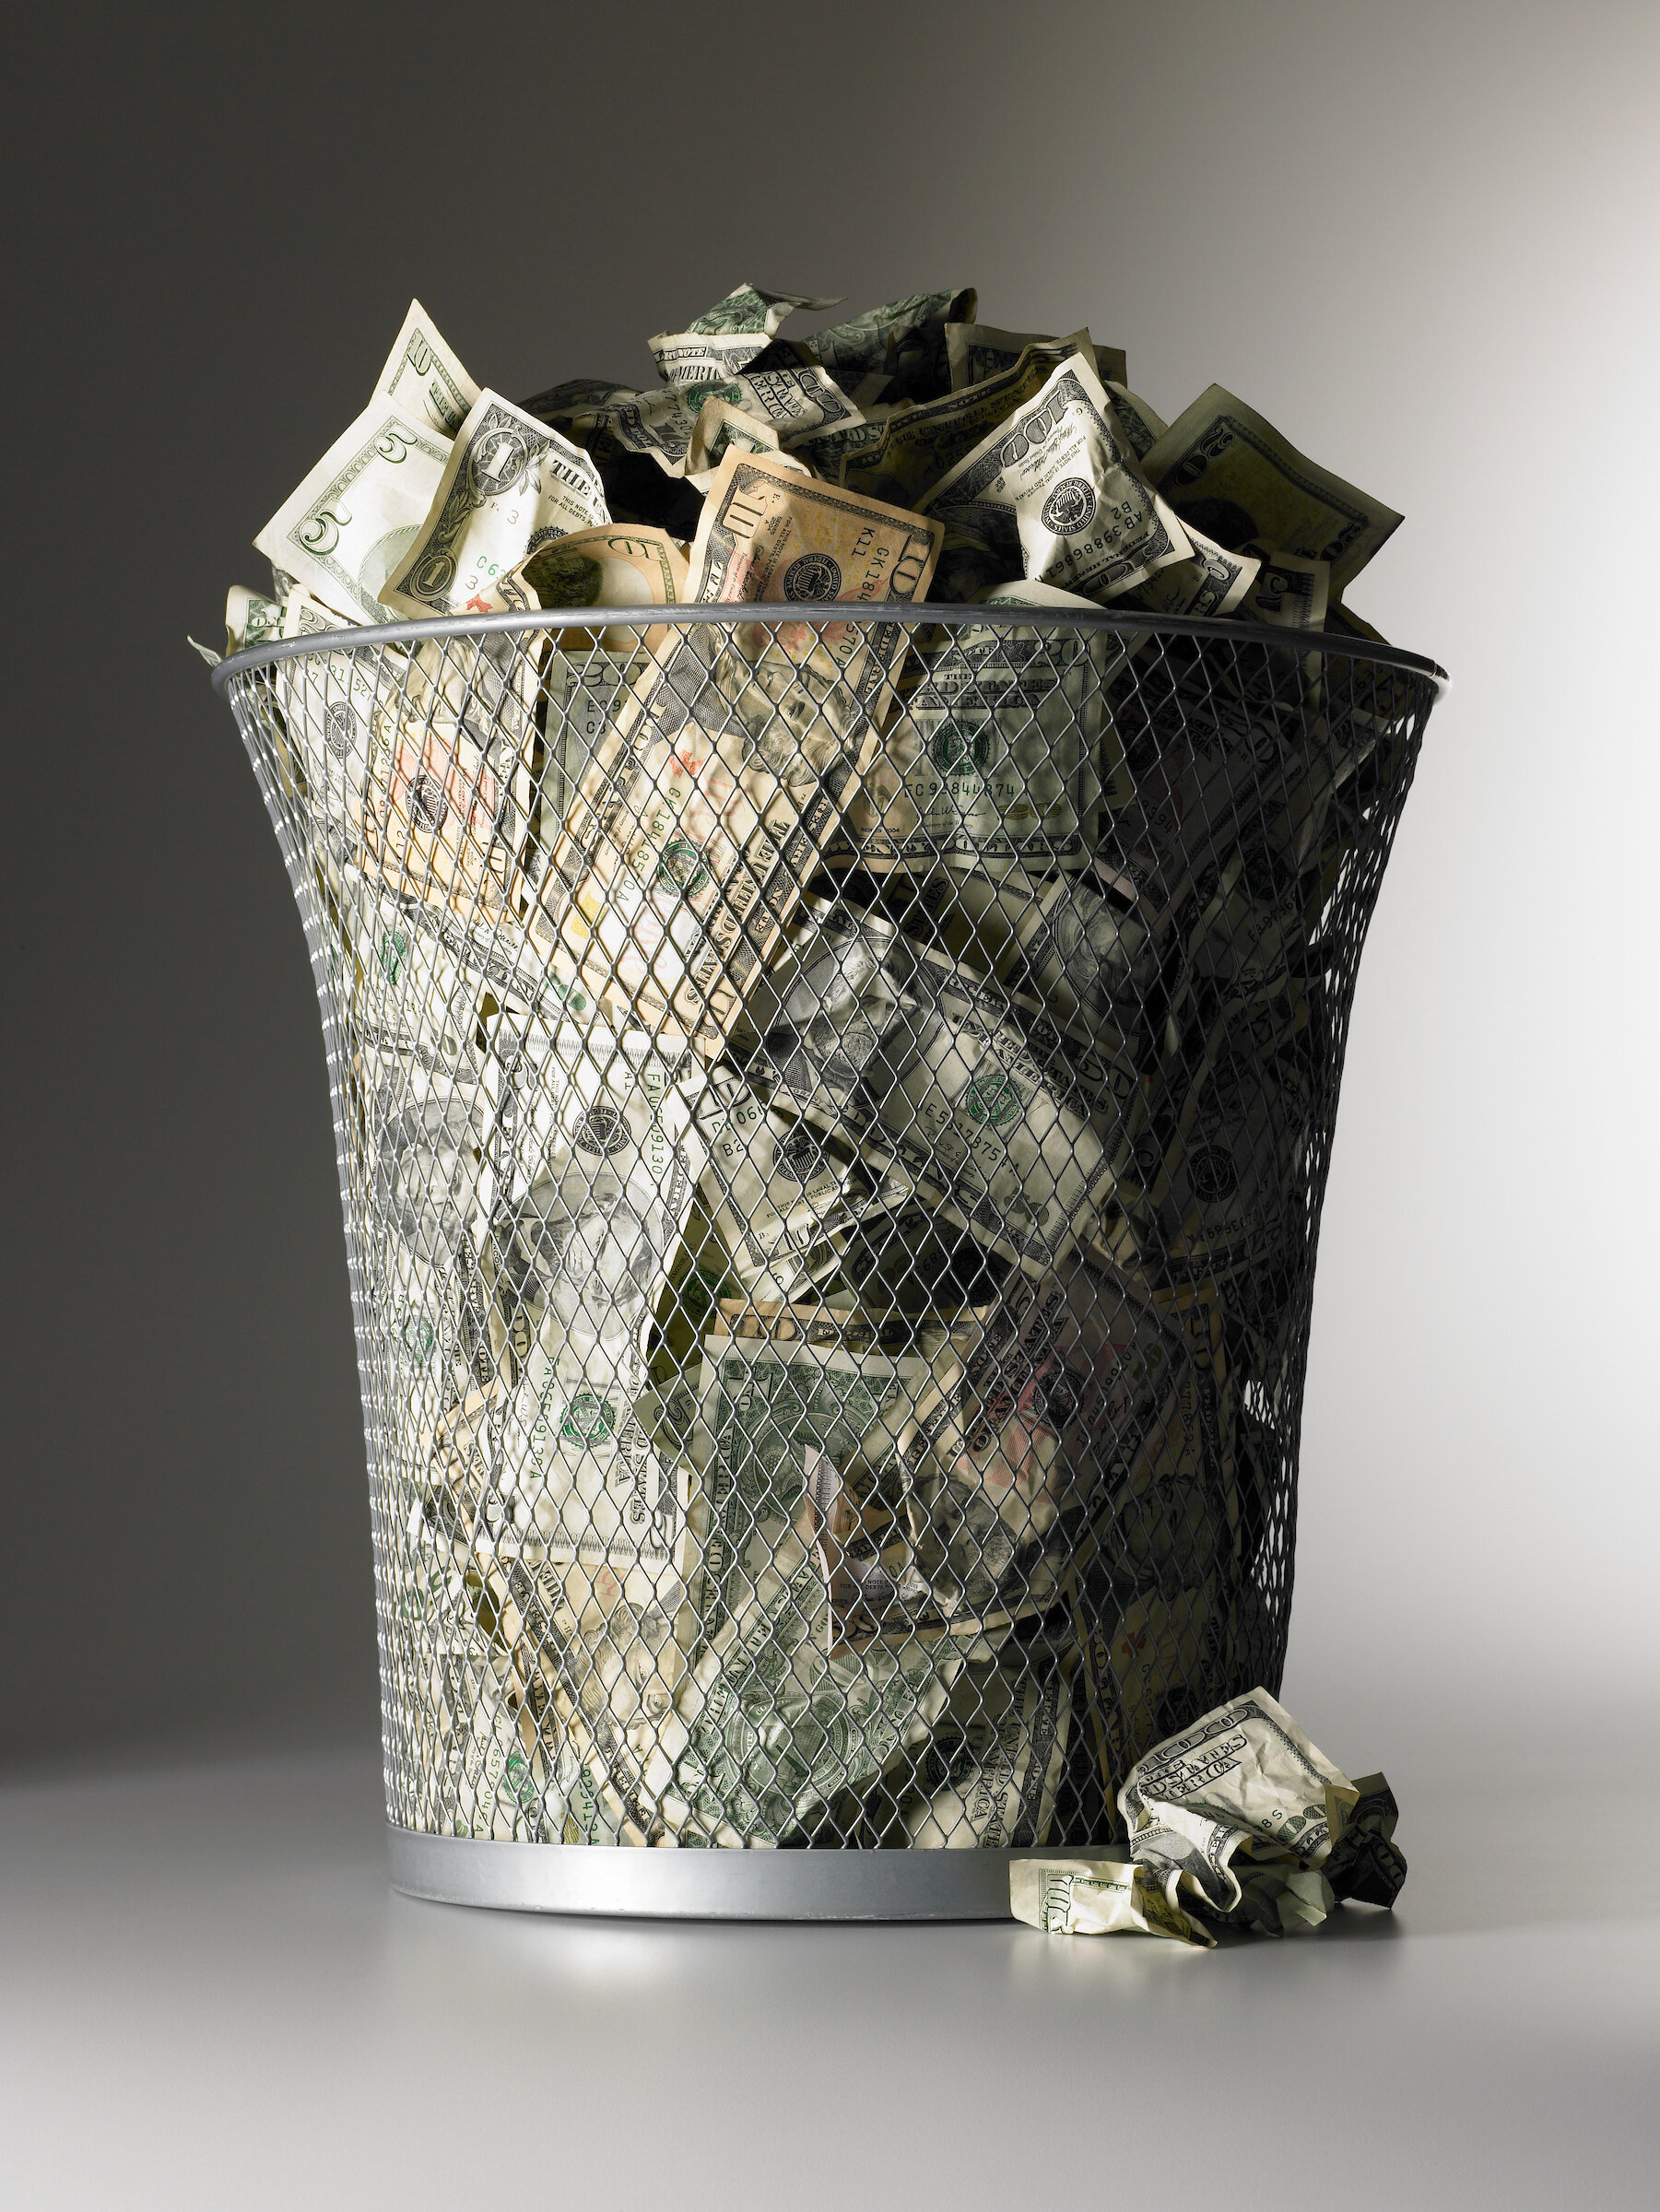 Money in trash bin throwing money away.jpg